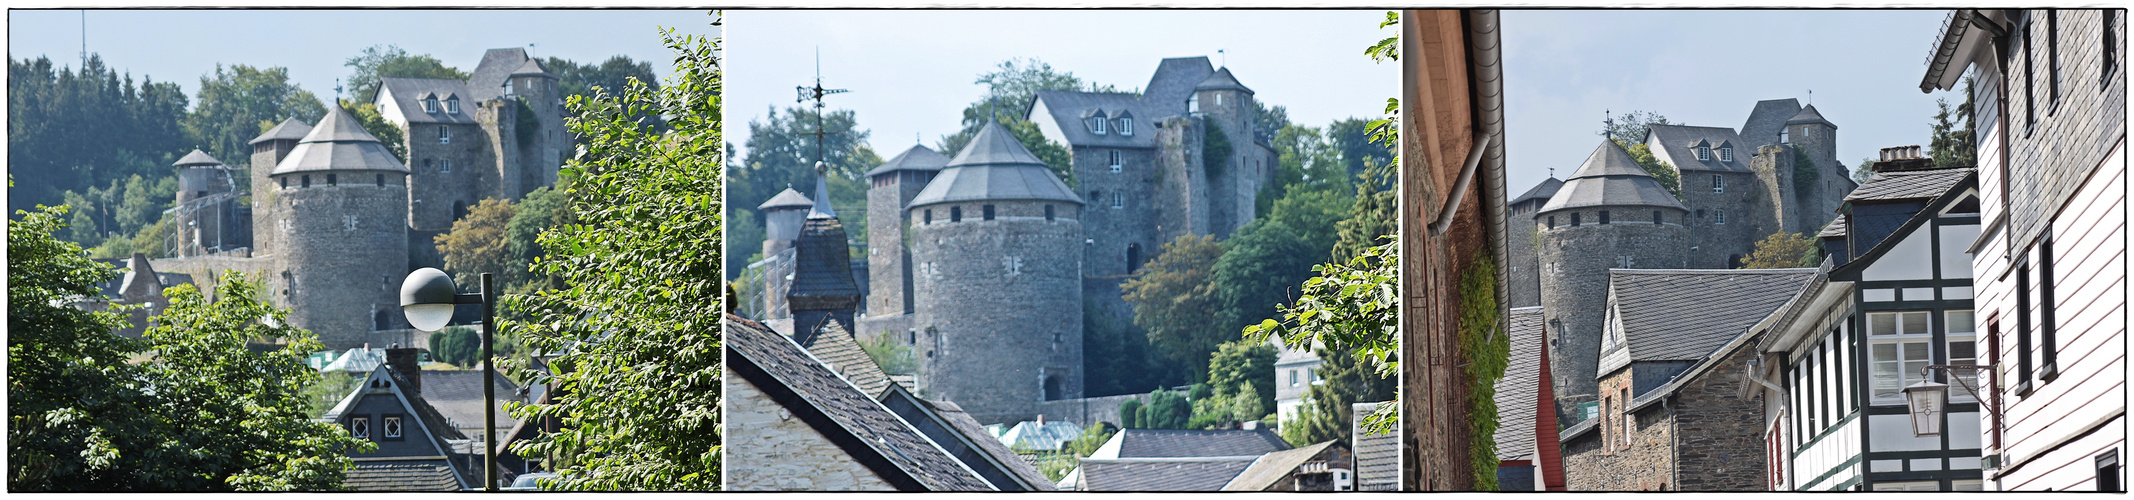 Burg Monschau